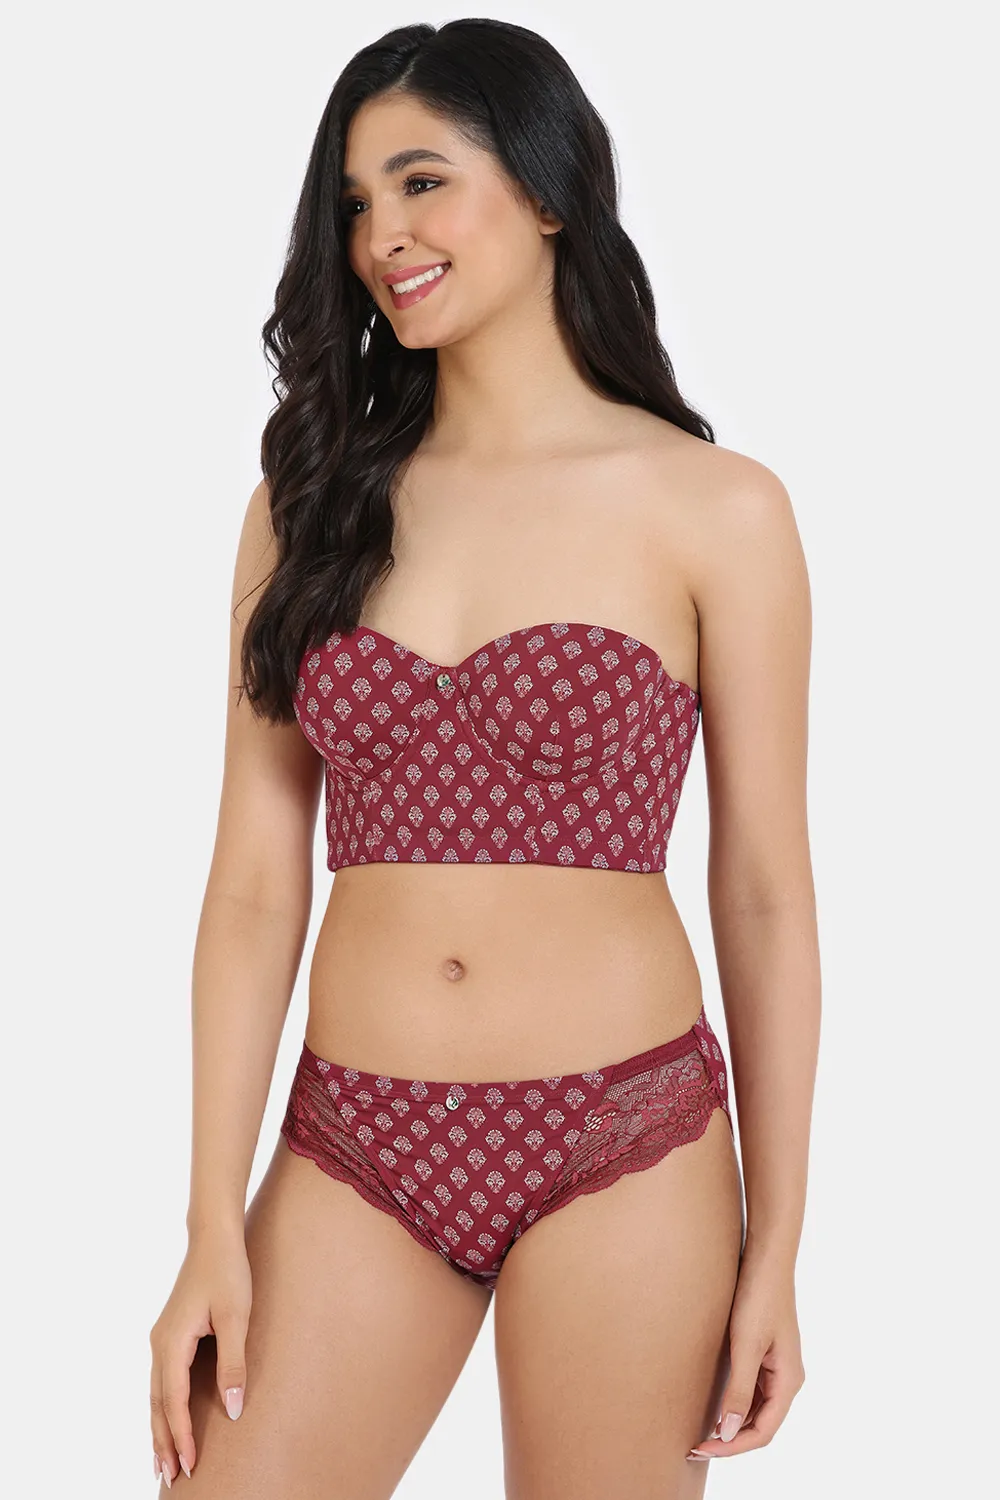 Buy Viral Girl Printed Bikini brief Strapless bra - 1 Lingerie Set Online  at Low Prices in India 